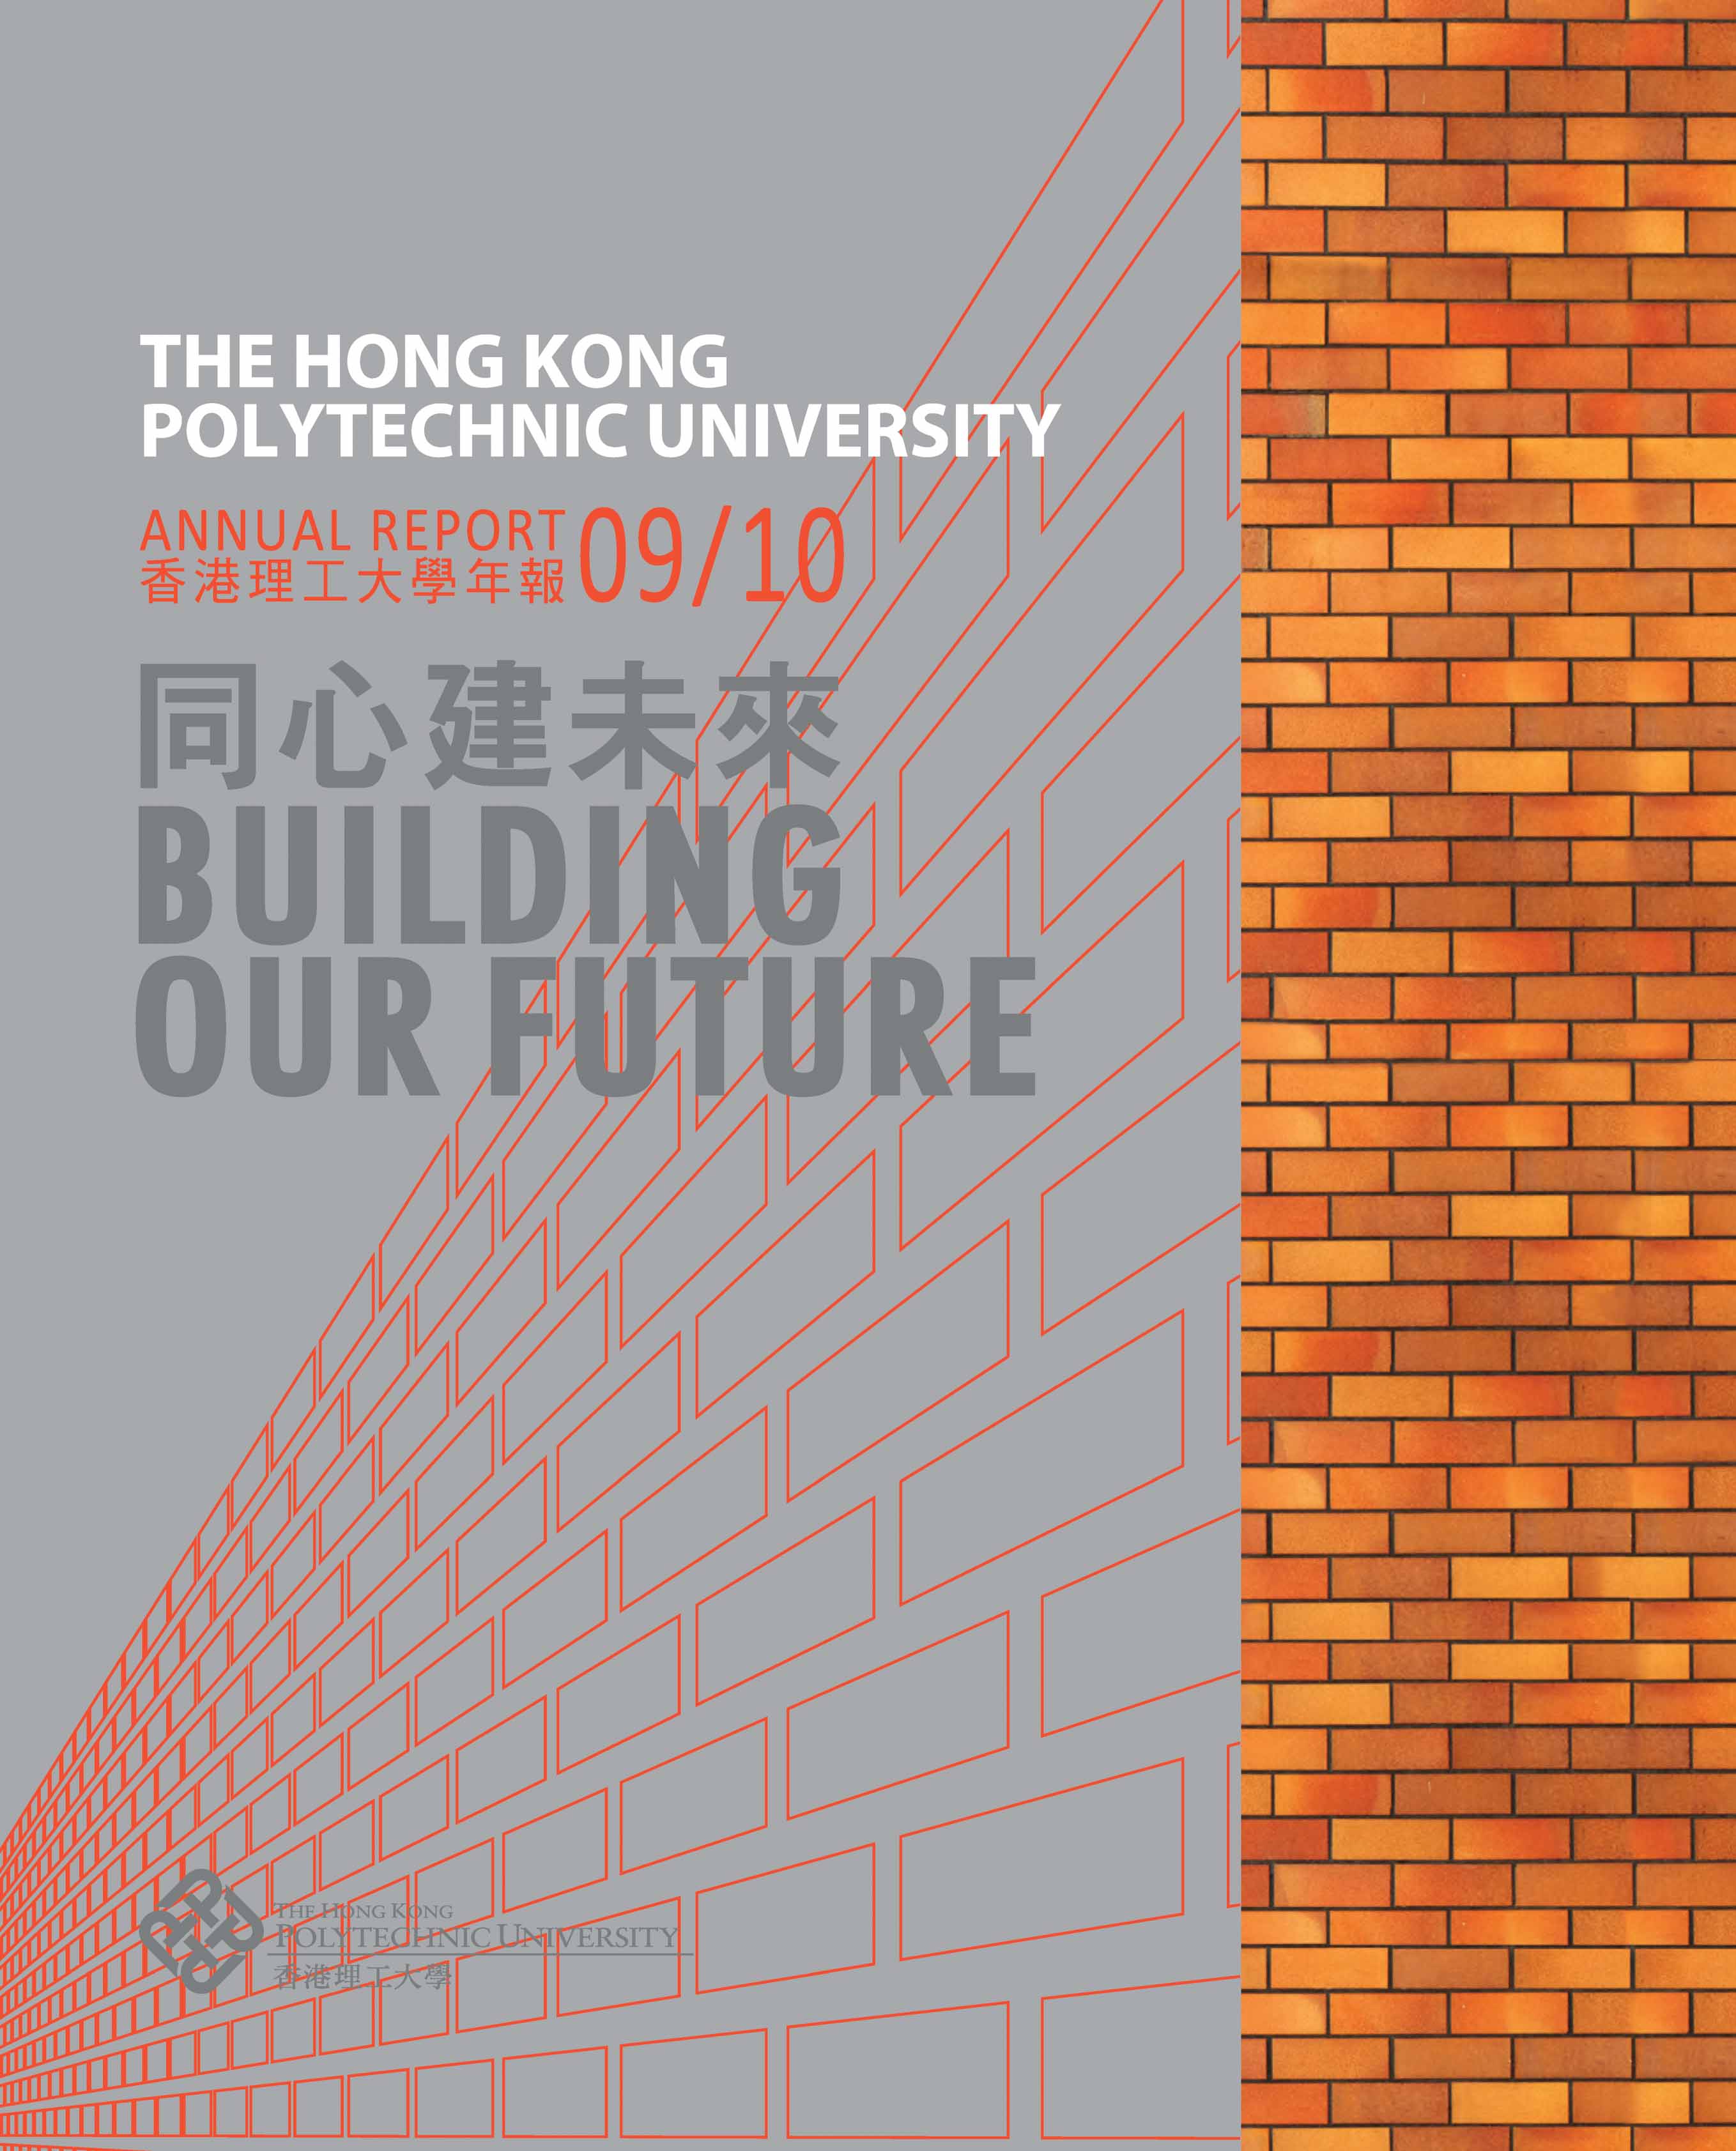 The Hong Kong Polytechnic University Annual Report 2009/10